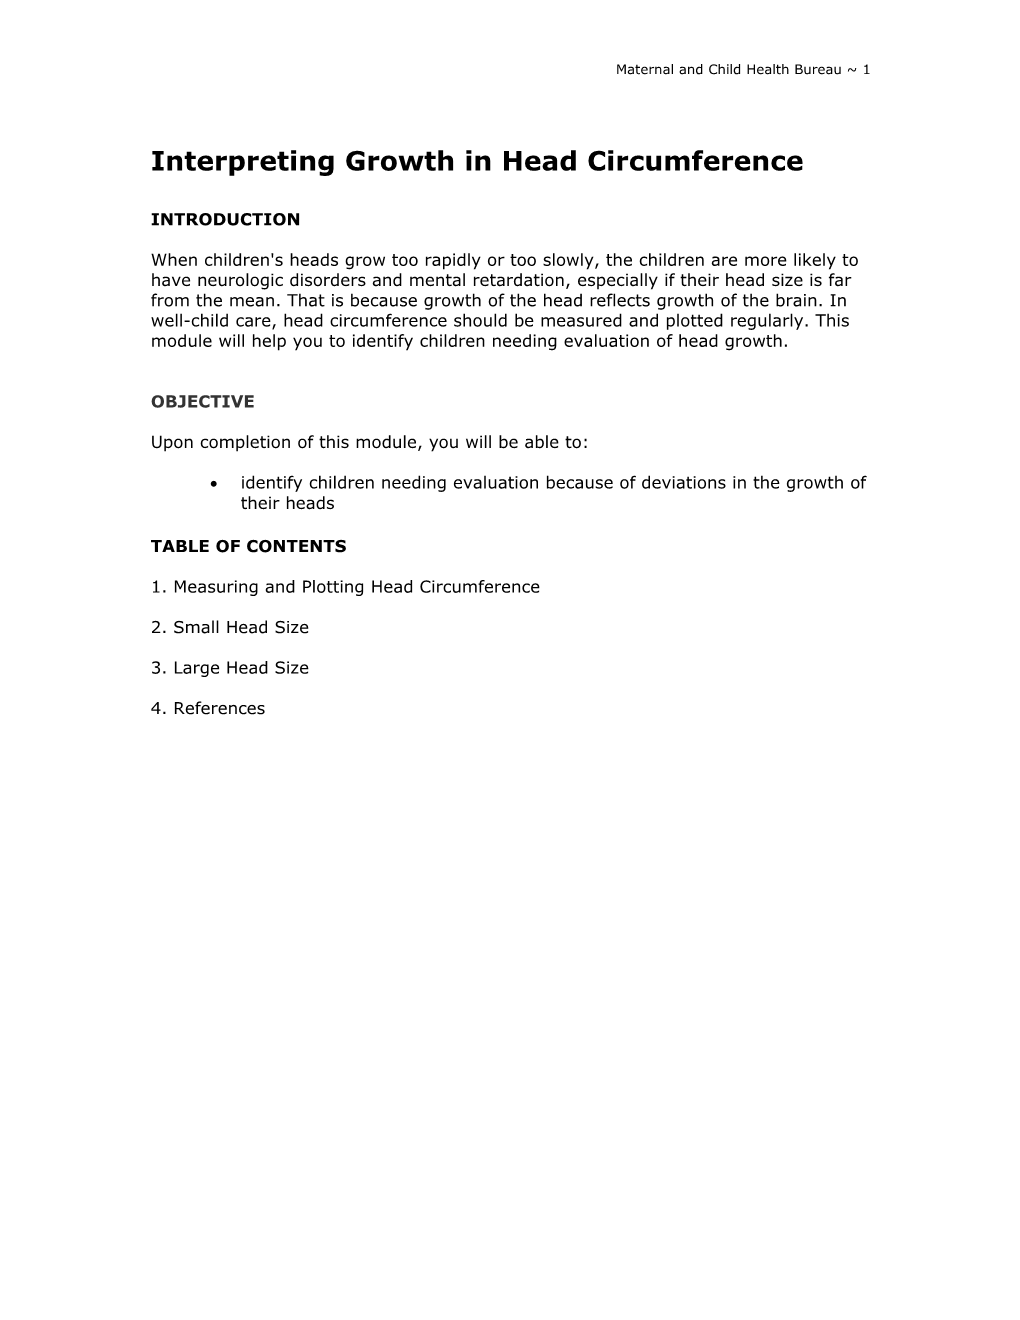 Interpreting Growth in Head Circumference